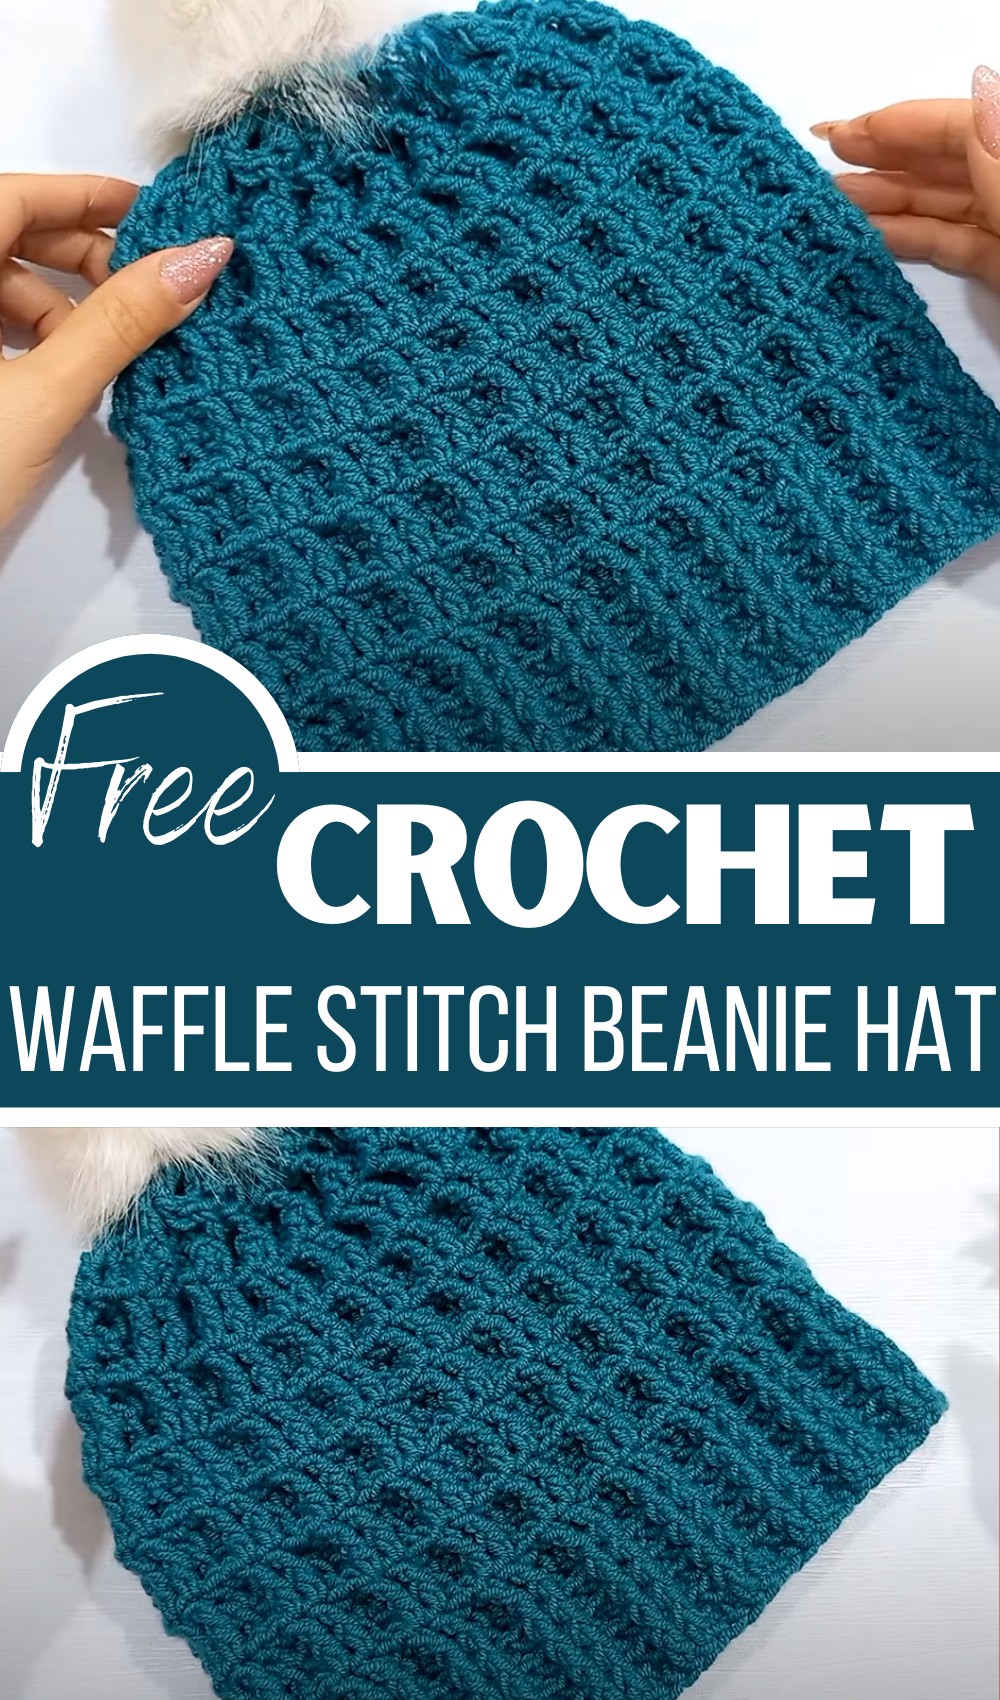 Crochet A Waffle Stitch Beanie Hat